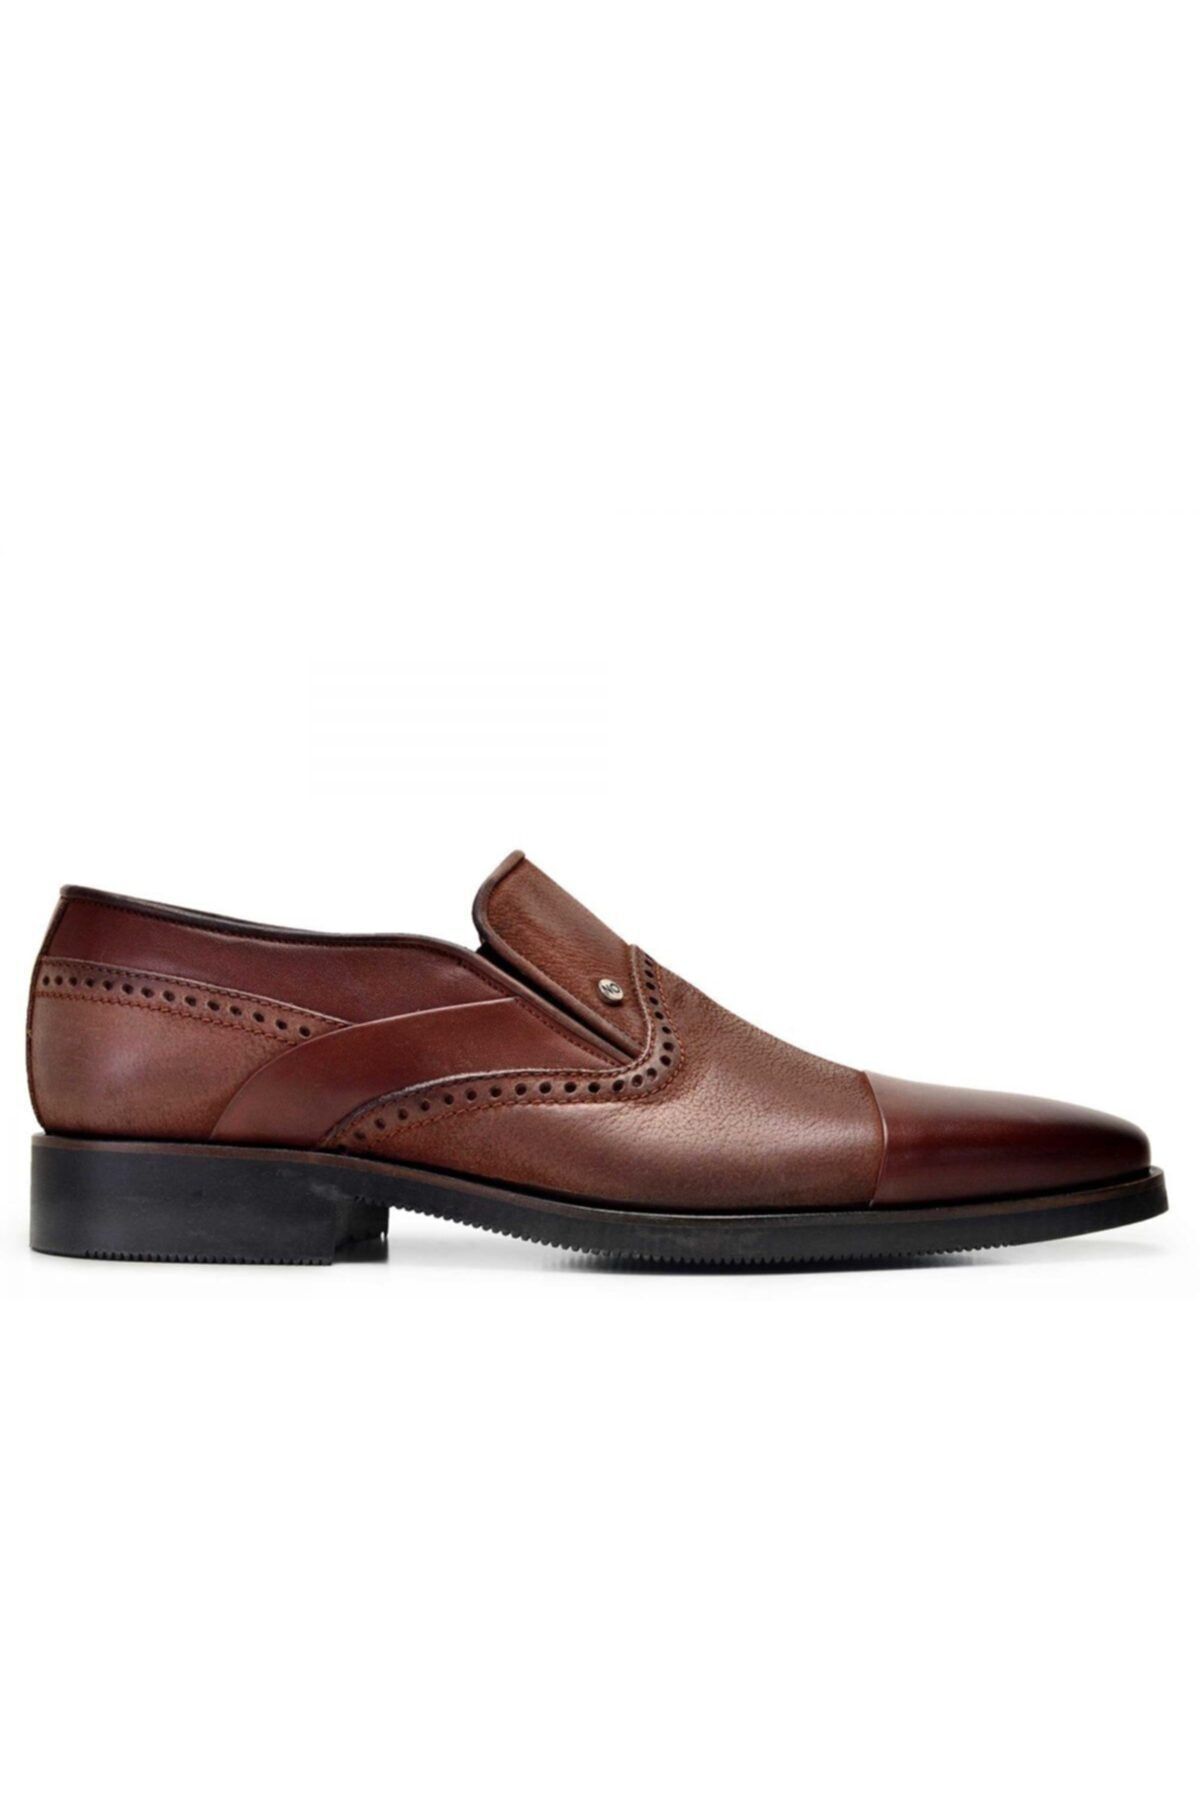 Nevzat Onay Hakiki Deri Kahverengi Klasik Loafer Erkek Ayakkabı -8127-